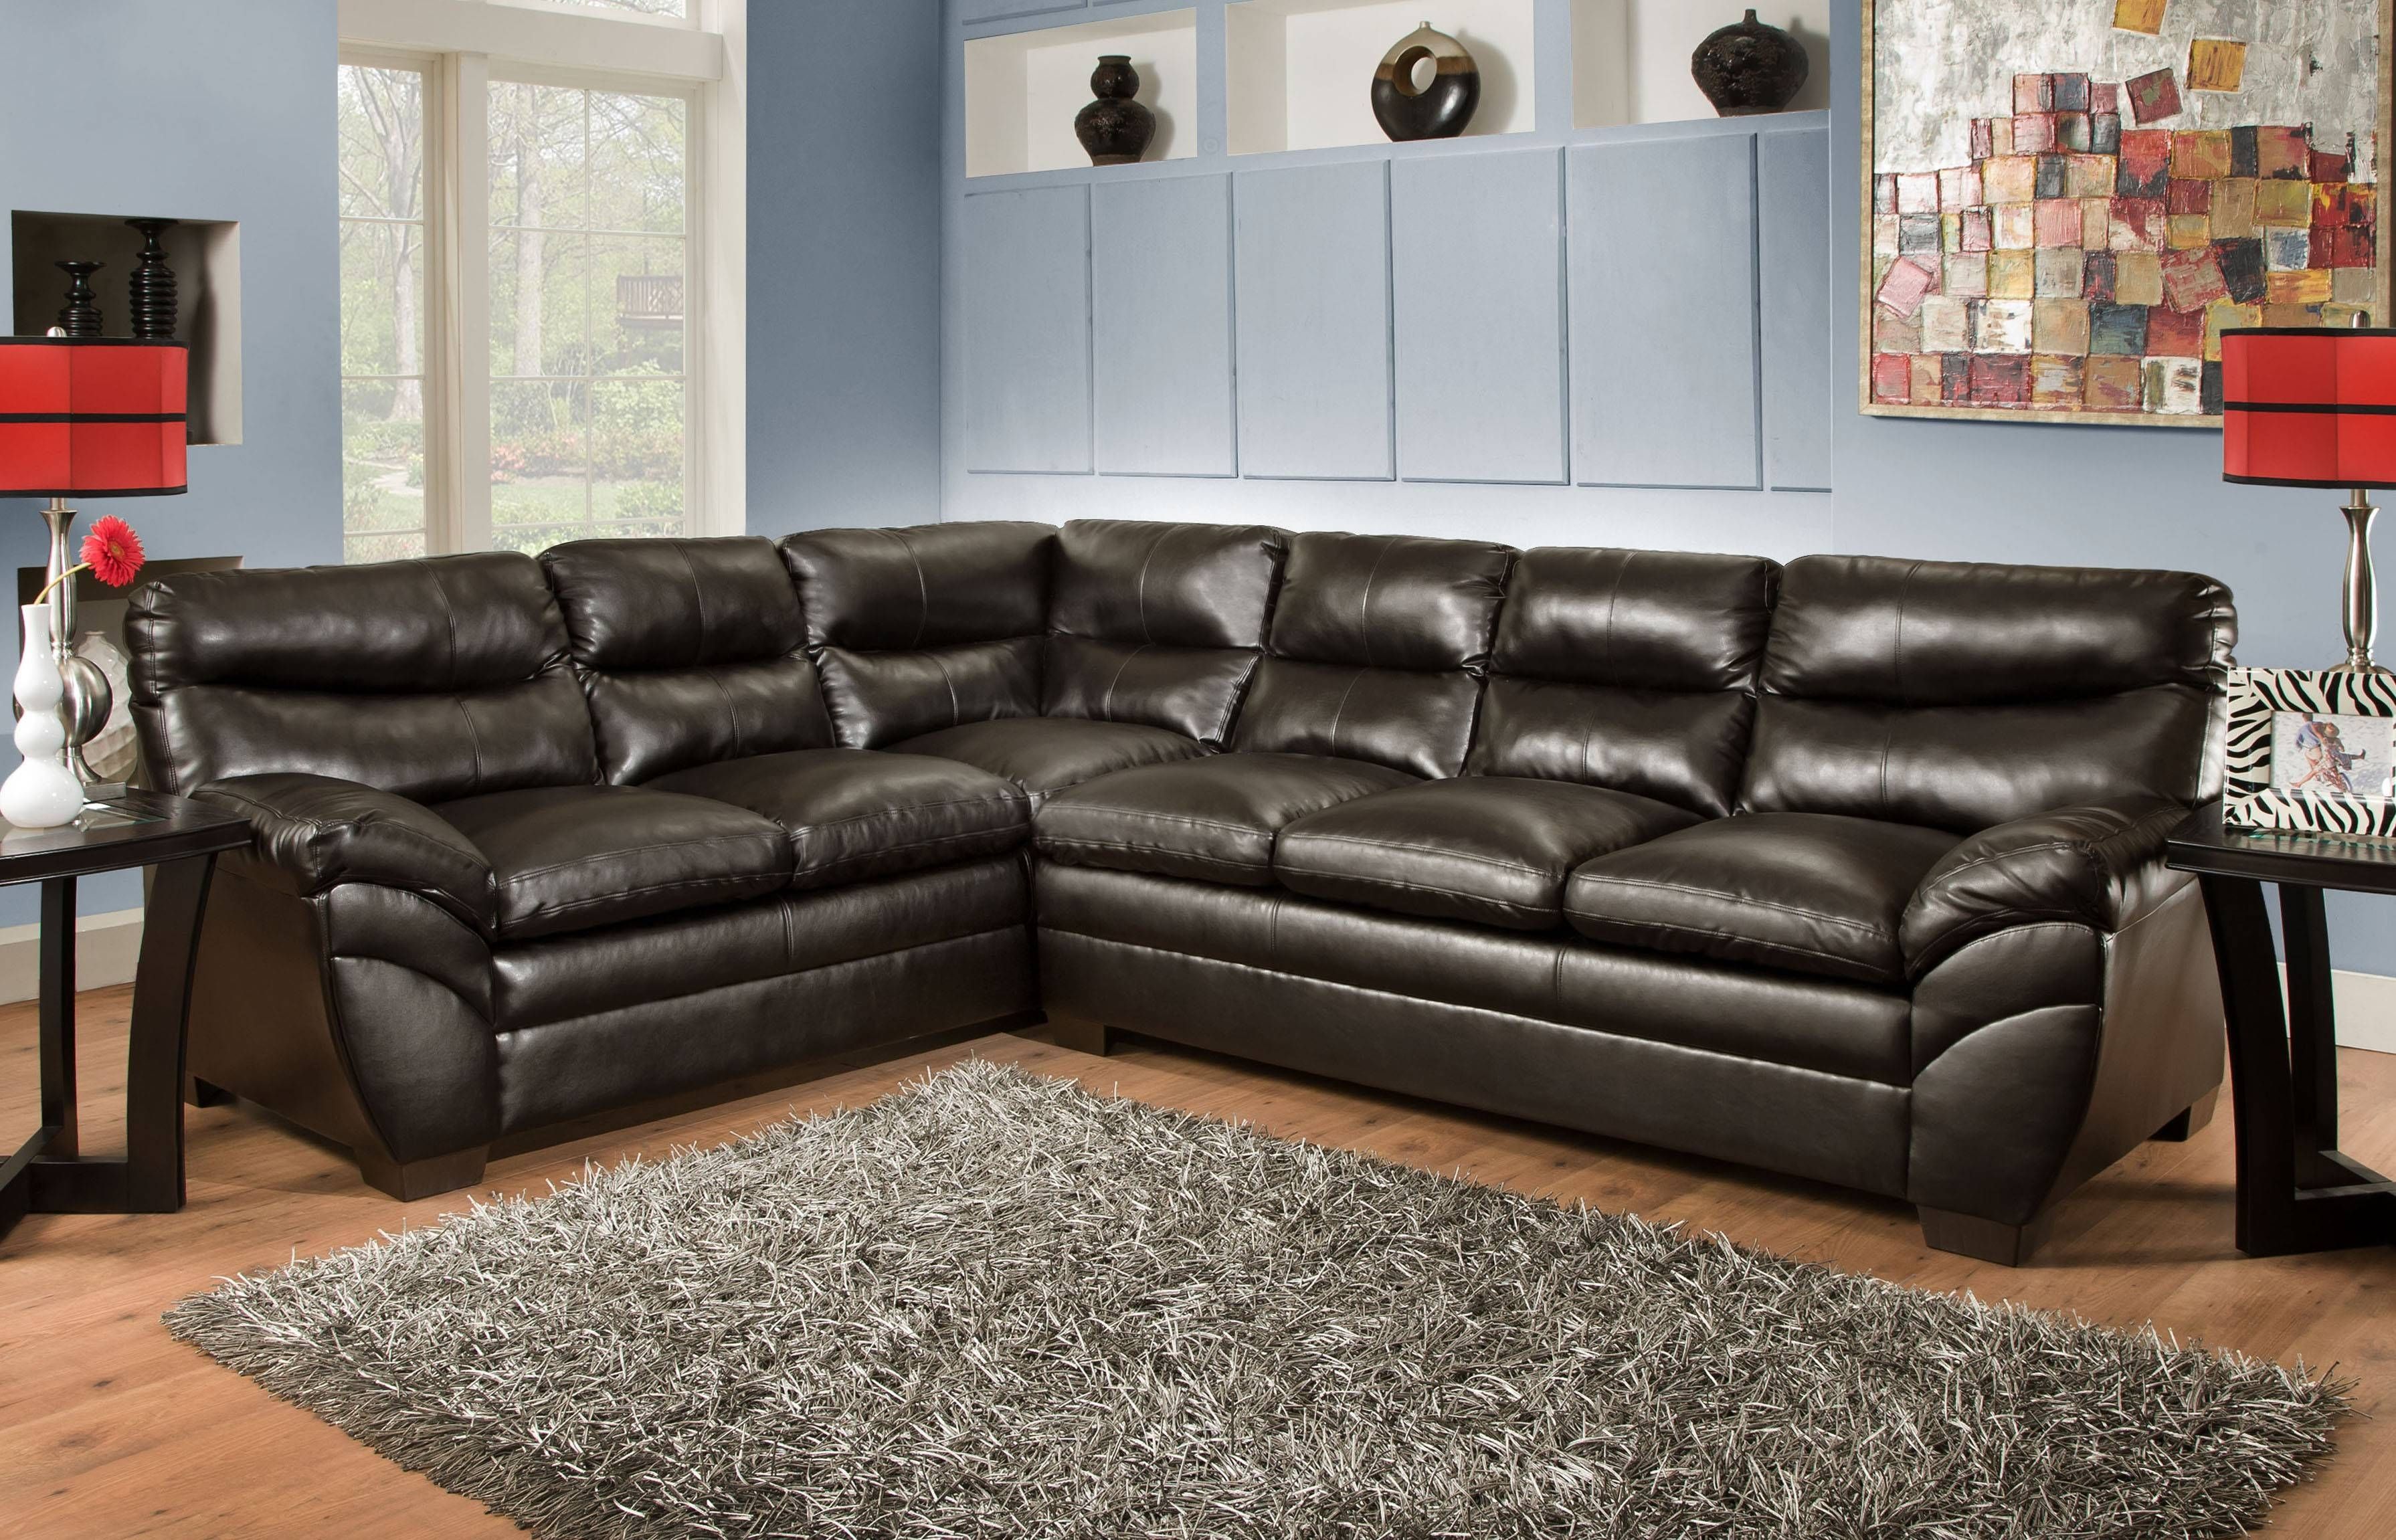 Sofa : Leather Sofas Orange County Home Design Wonderfull In Sofas Orange County (Photo 6 of 30)